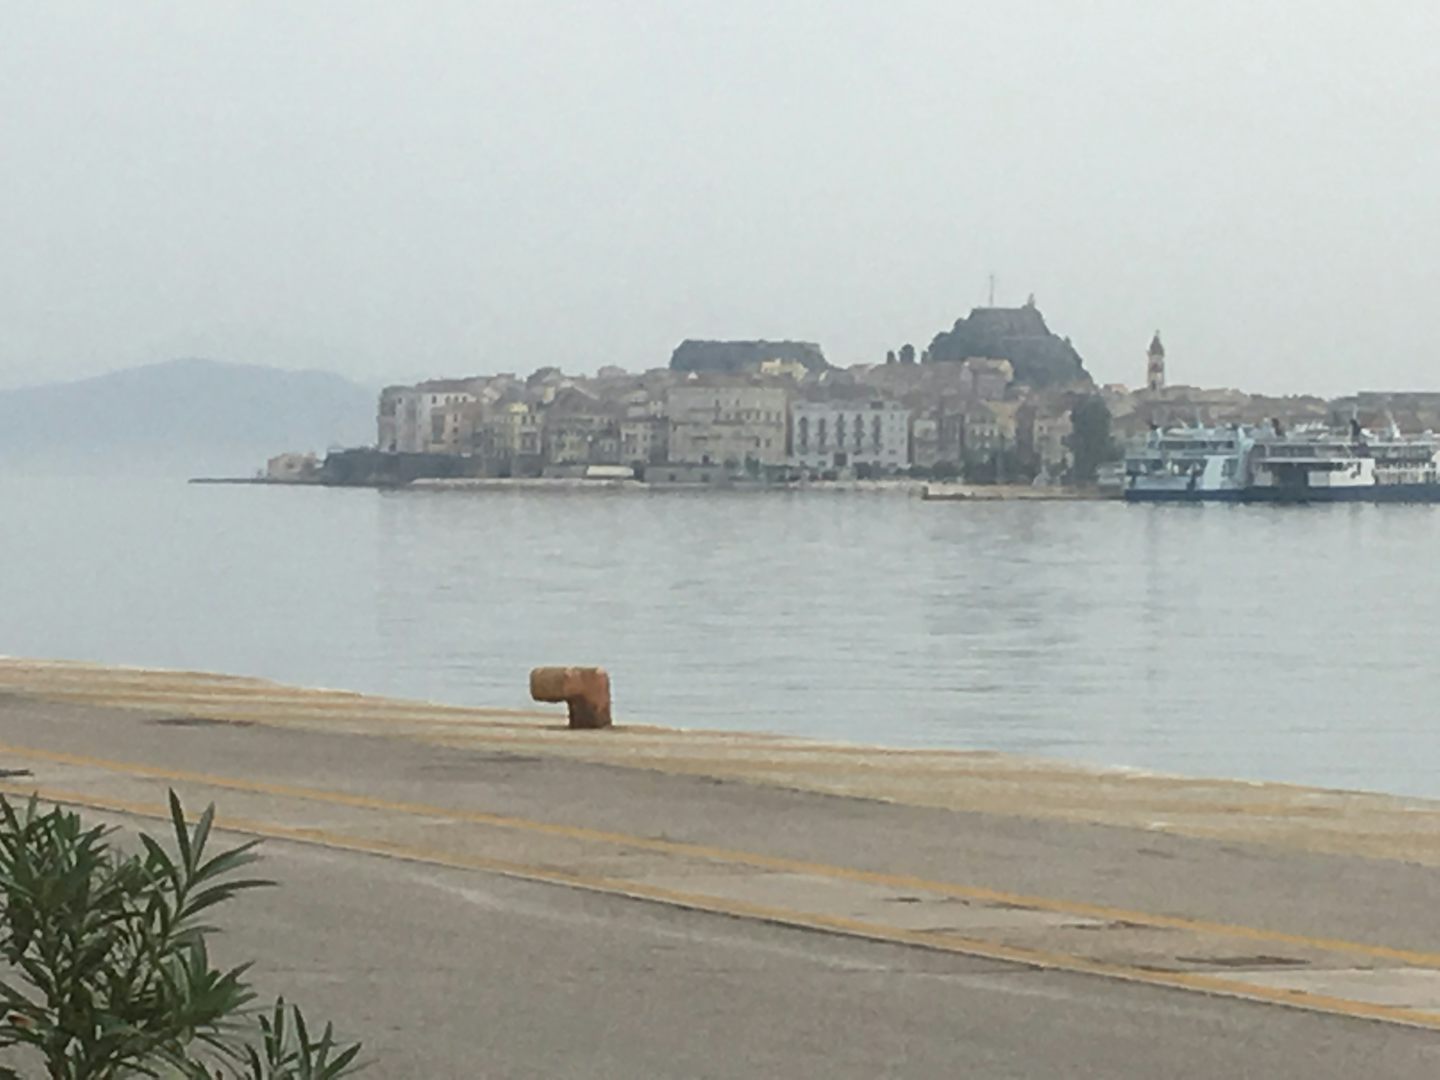 Leaving Corfu